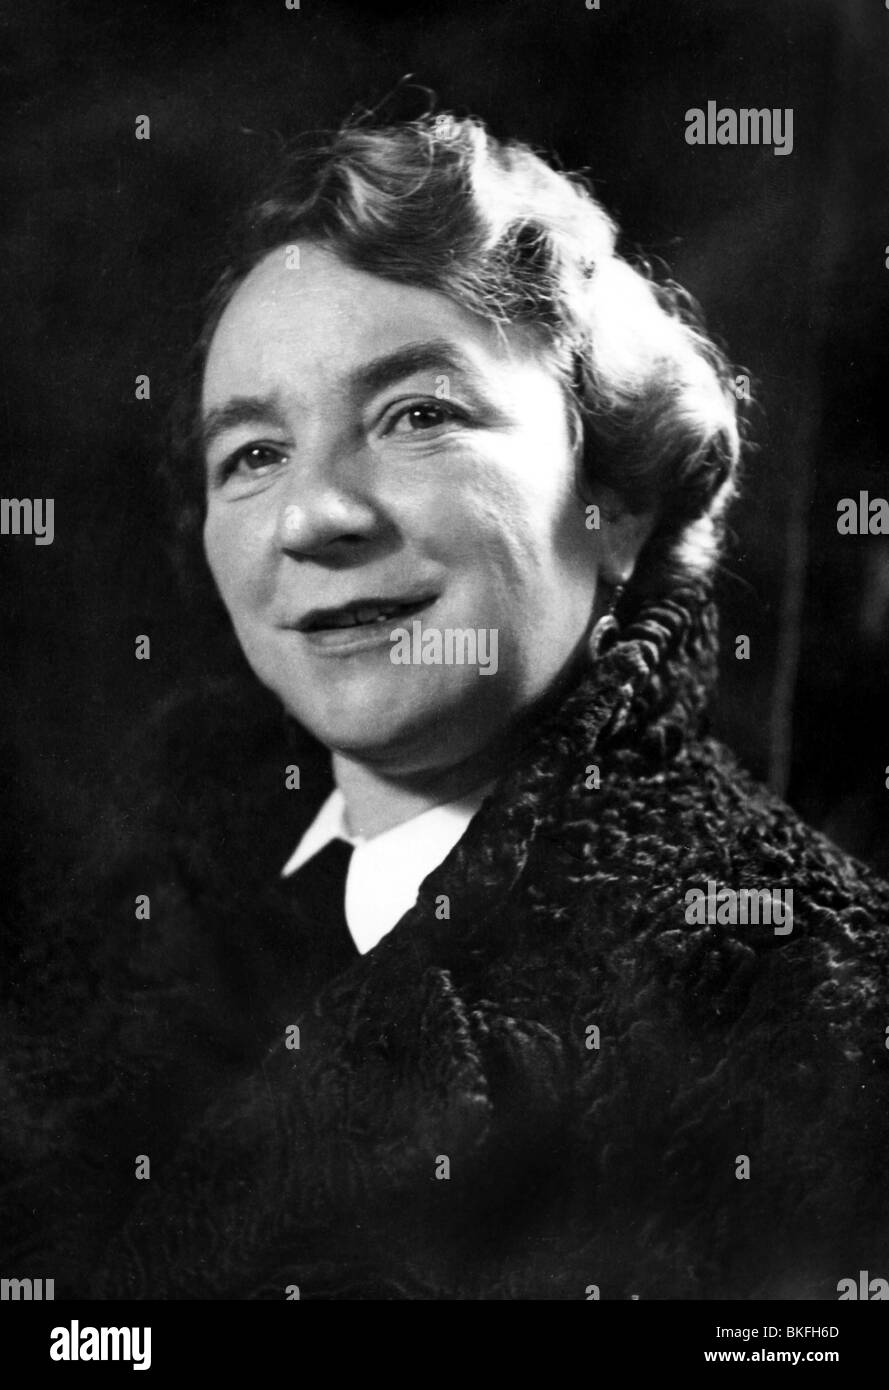 Karlstadt, Liesl, 12.12.1892 - 27.7.1960, German actress, portrait, 1940s, Stock Photo